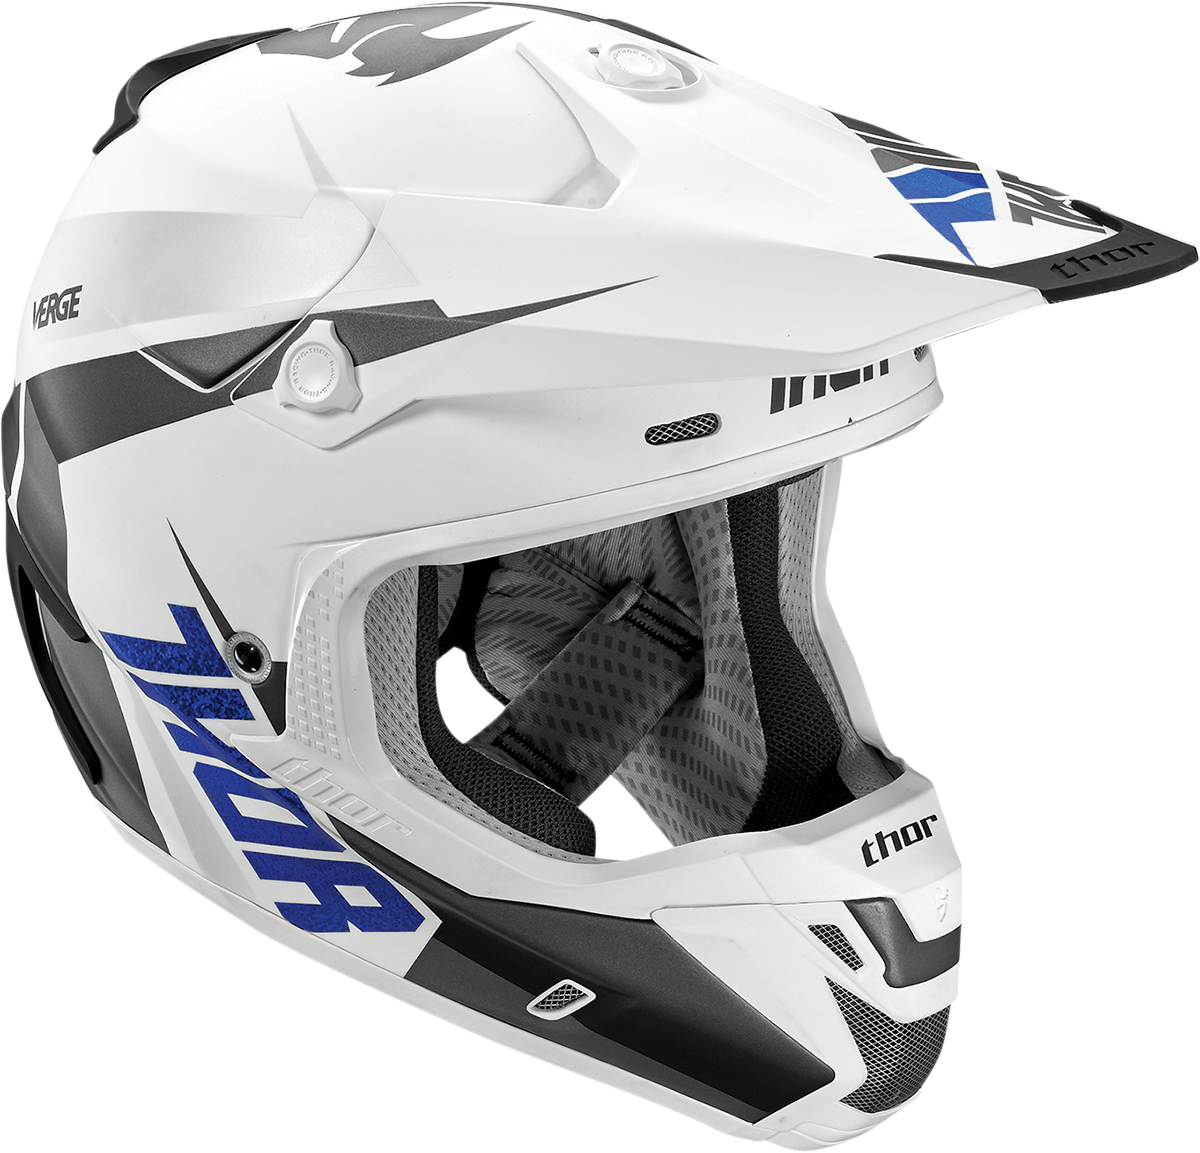 Motocross Helmet PNG Transparent Picture